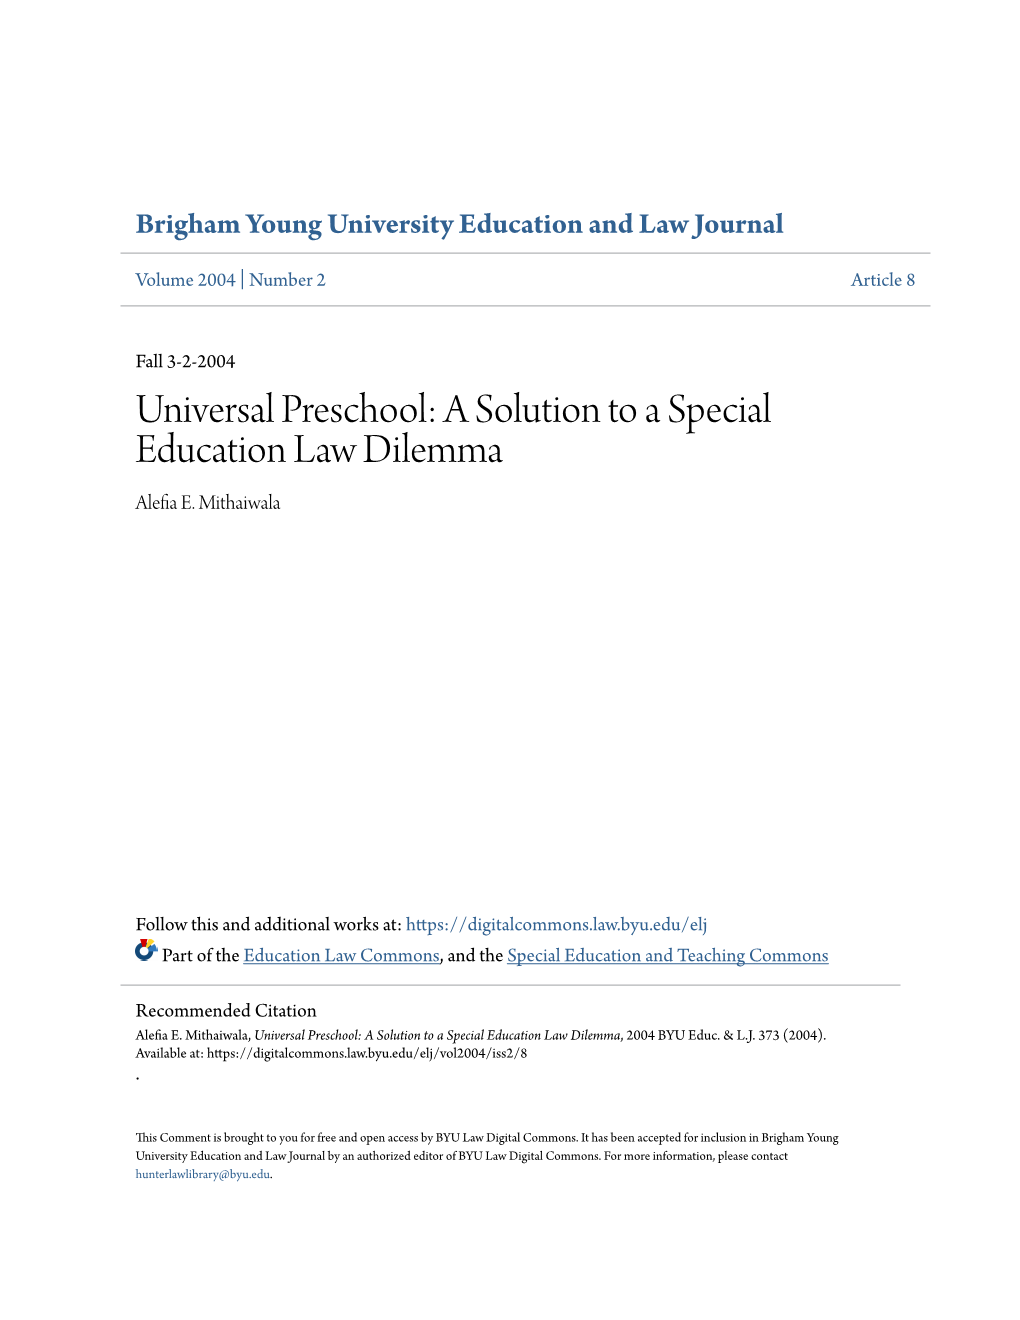 Universal Preschool: a Solution to a Special Education Law Dilemma Alefia E